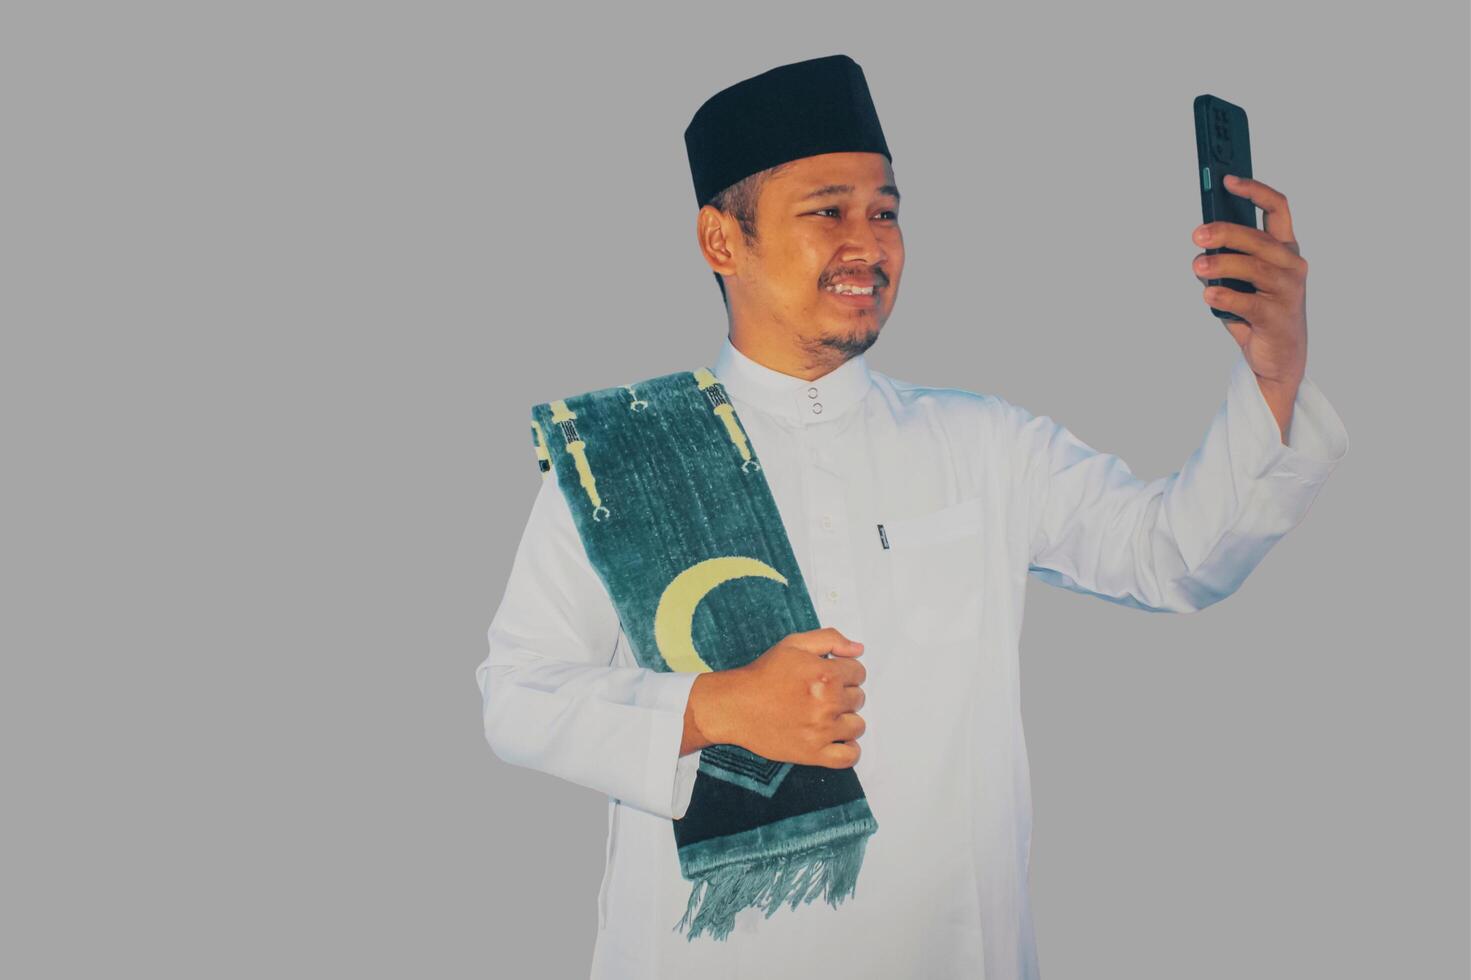 Moslem asiatisch Mann geballt Faust zeigen Aufregung wann suchen zu seine Handy, Mobiltelefon Telefon foto